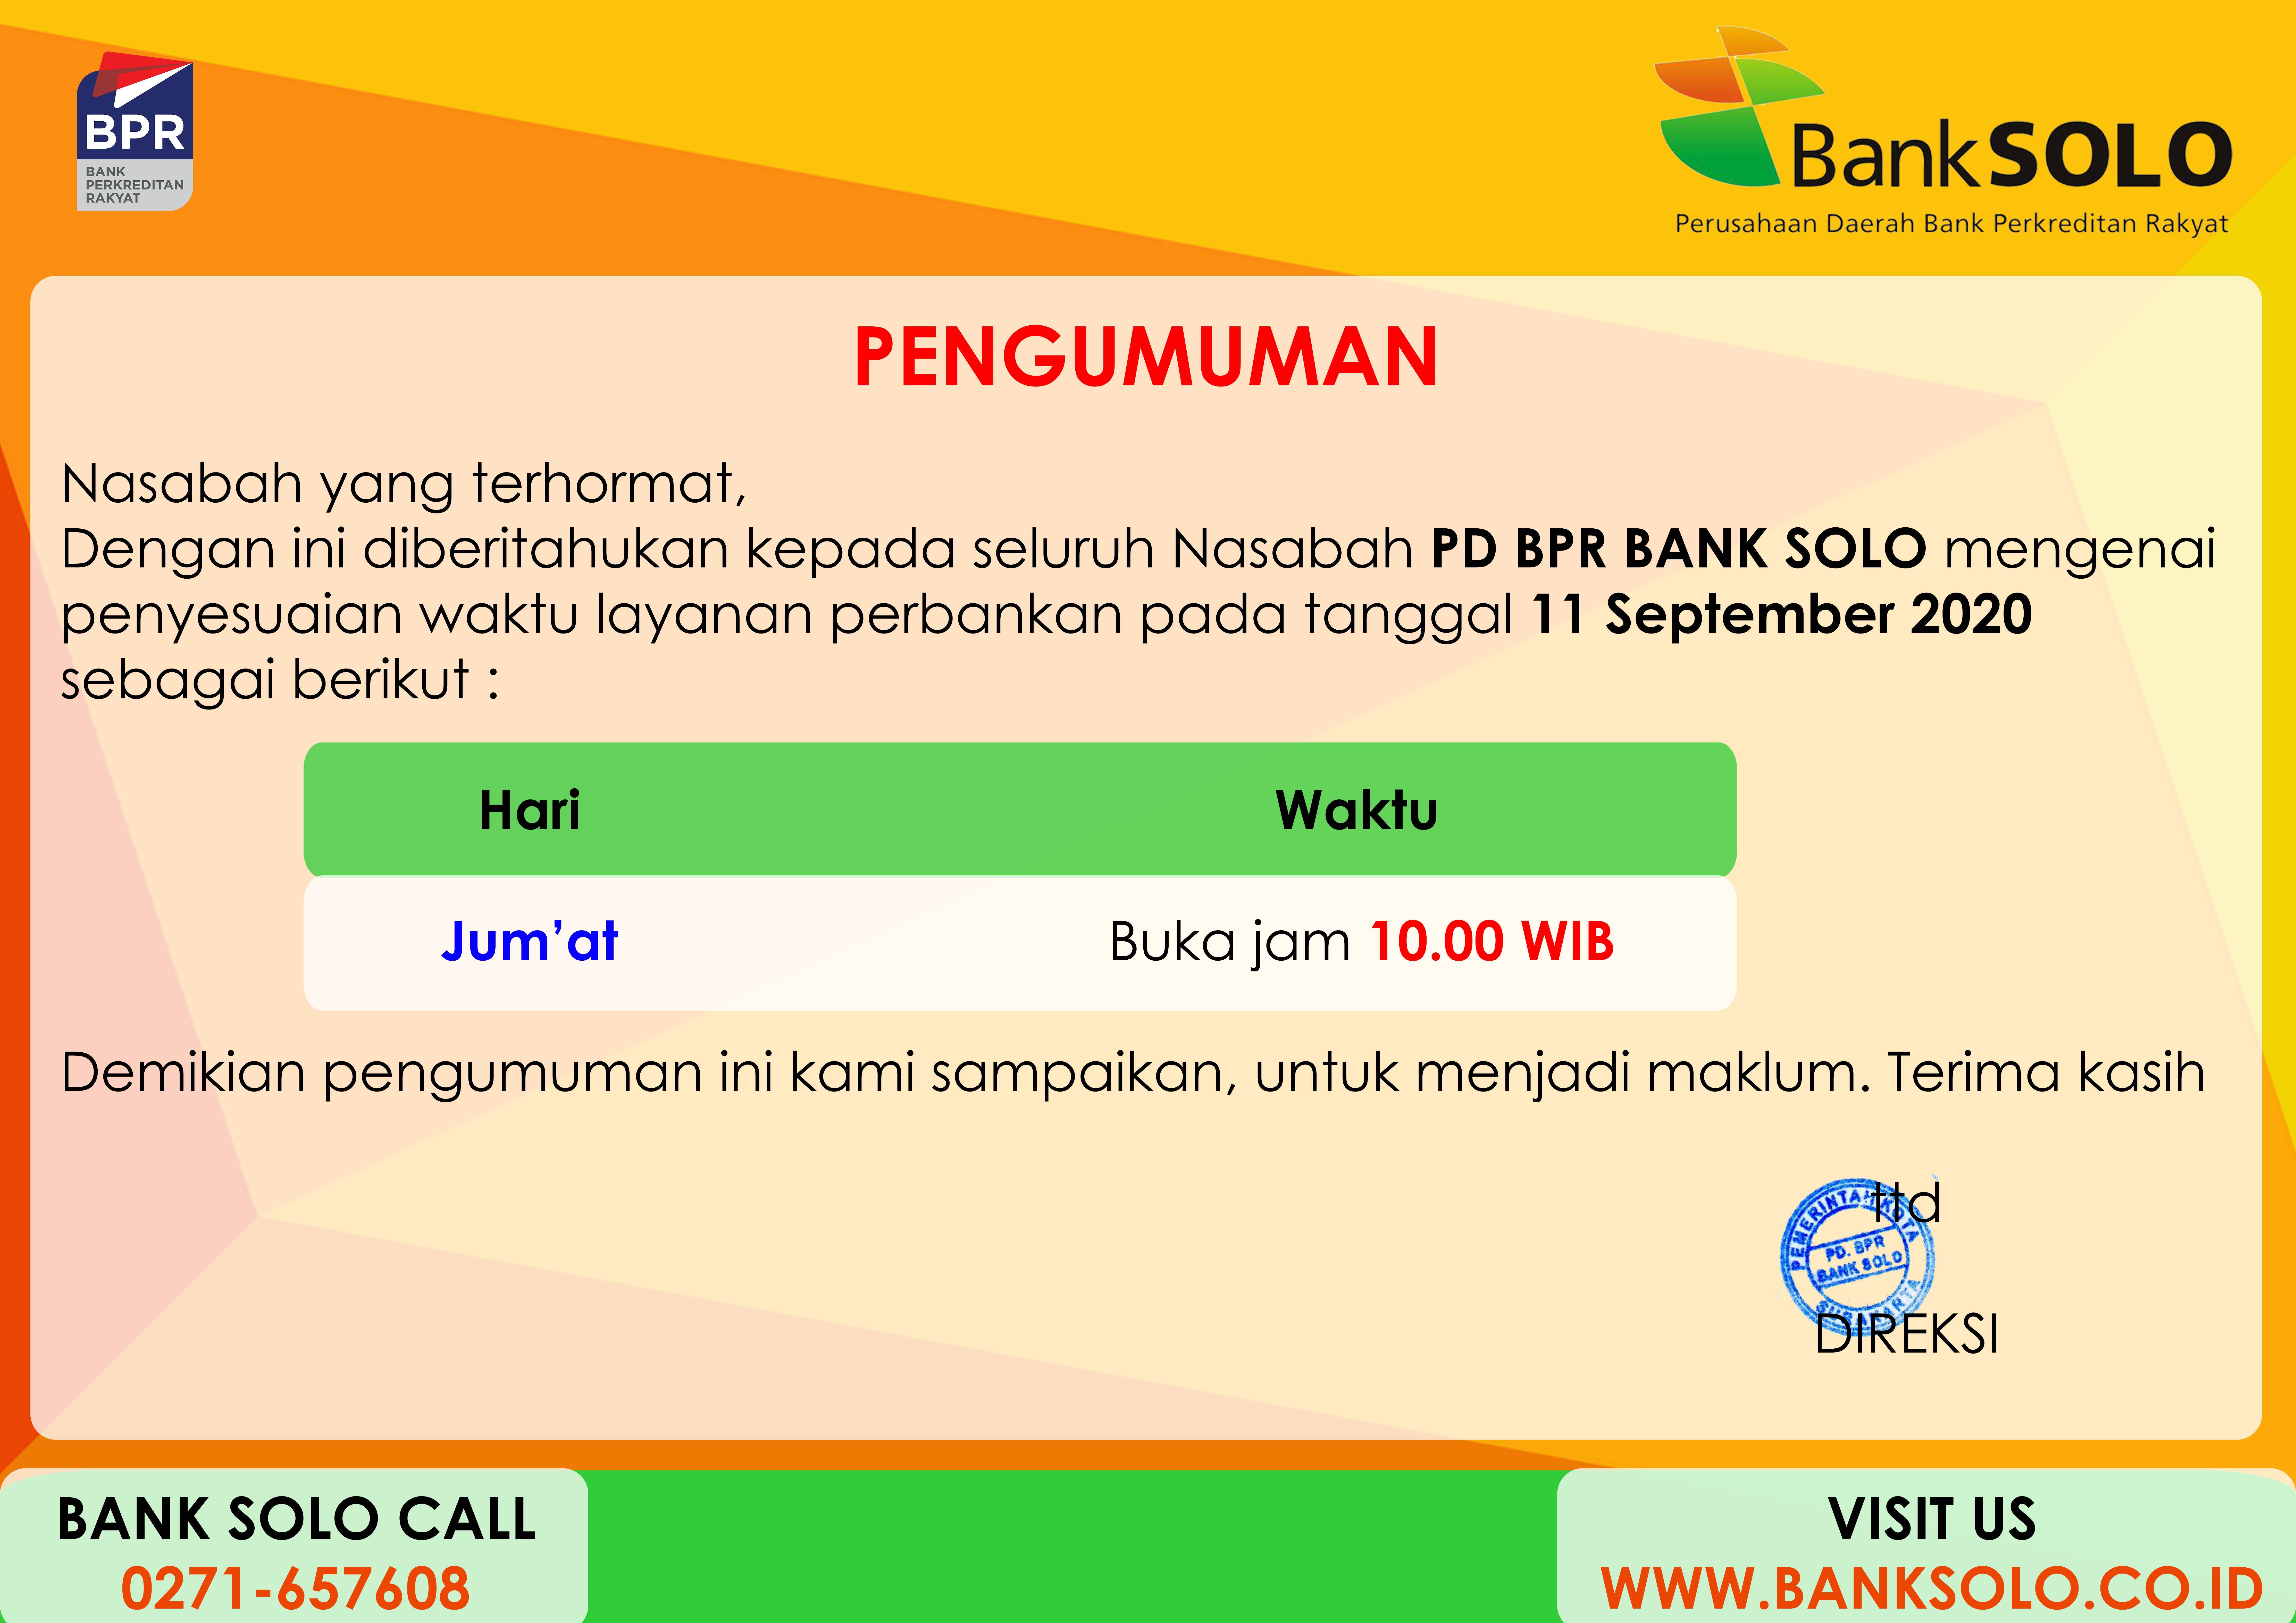 BANK SOLO